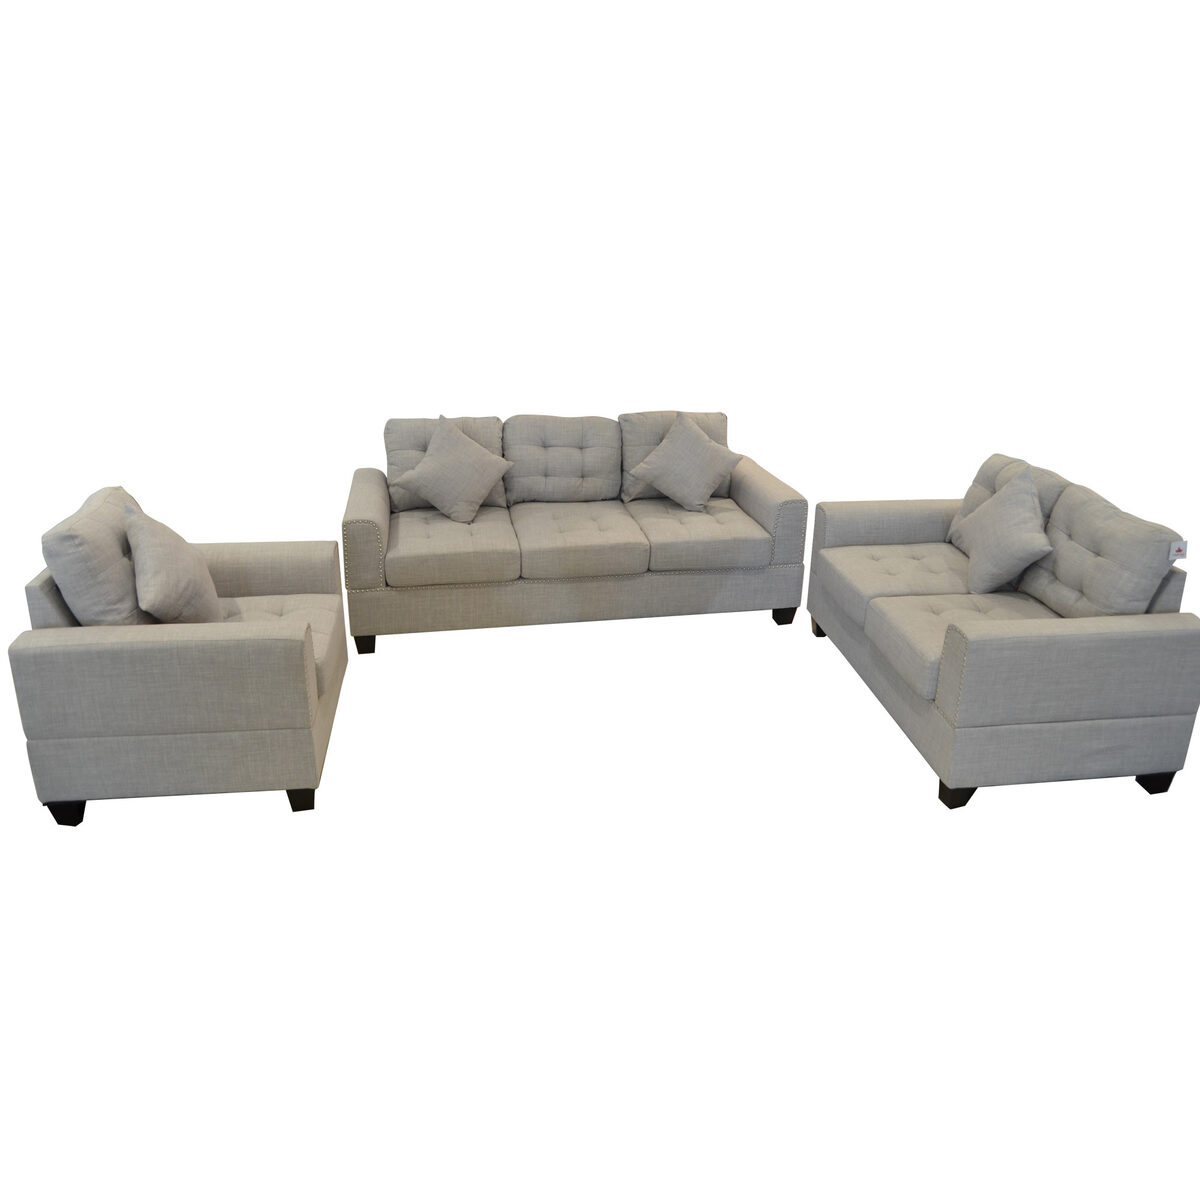 Maple Leaf Sofa Set 3+2+1 MLM111516 Grey,Size 1 Seater Size:85x85x90,2 Seater Size:85x85x145,3 Seater Size:85x85x204. (HxWXL- Cms)